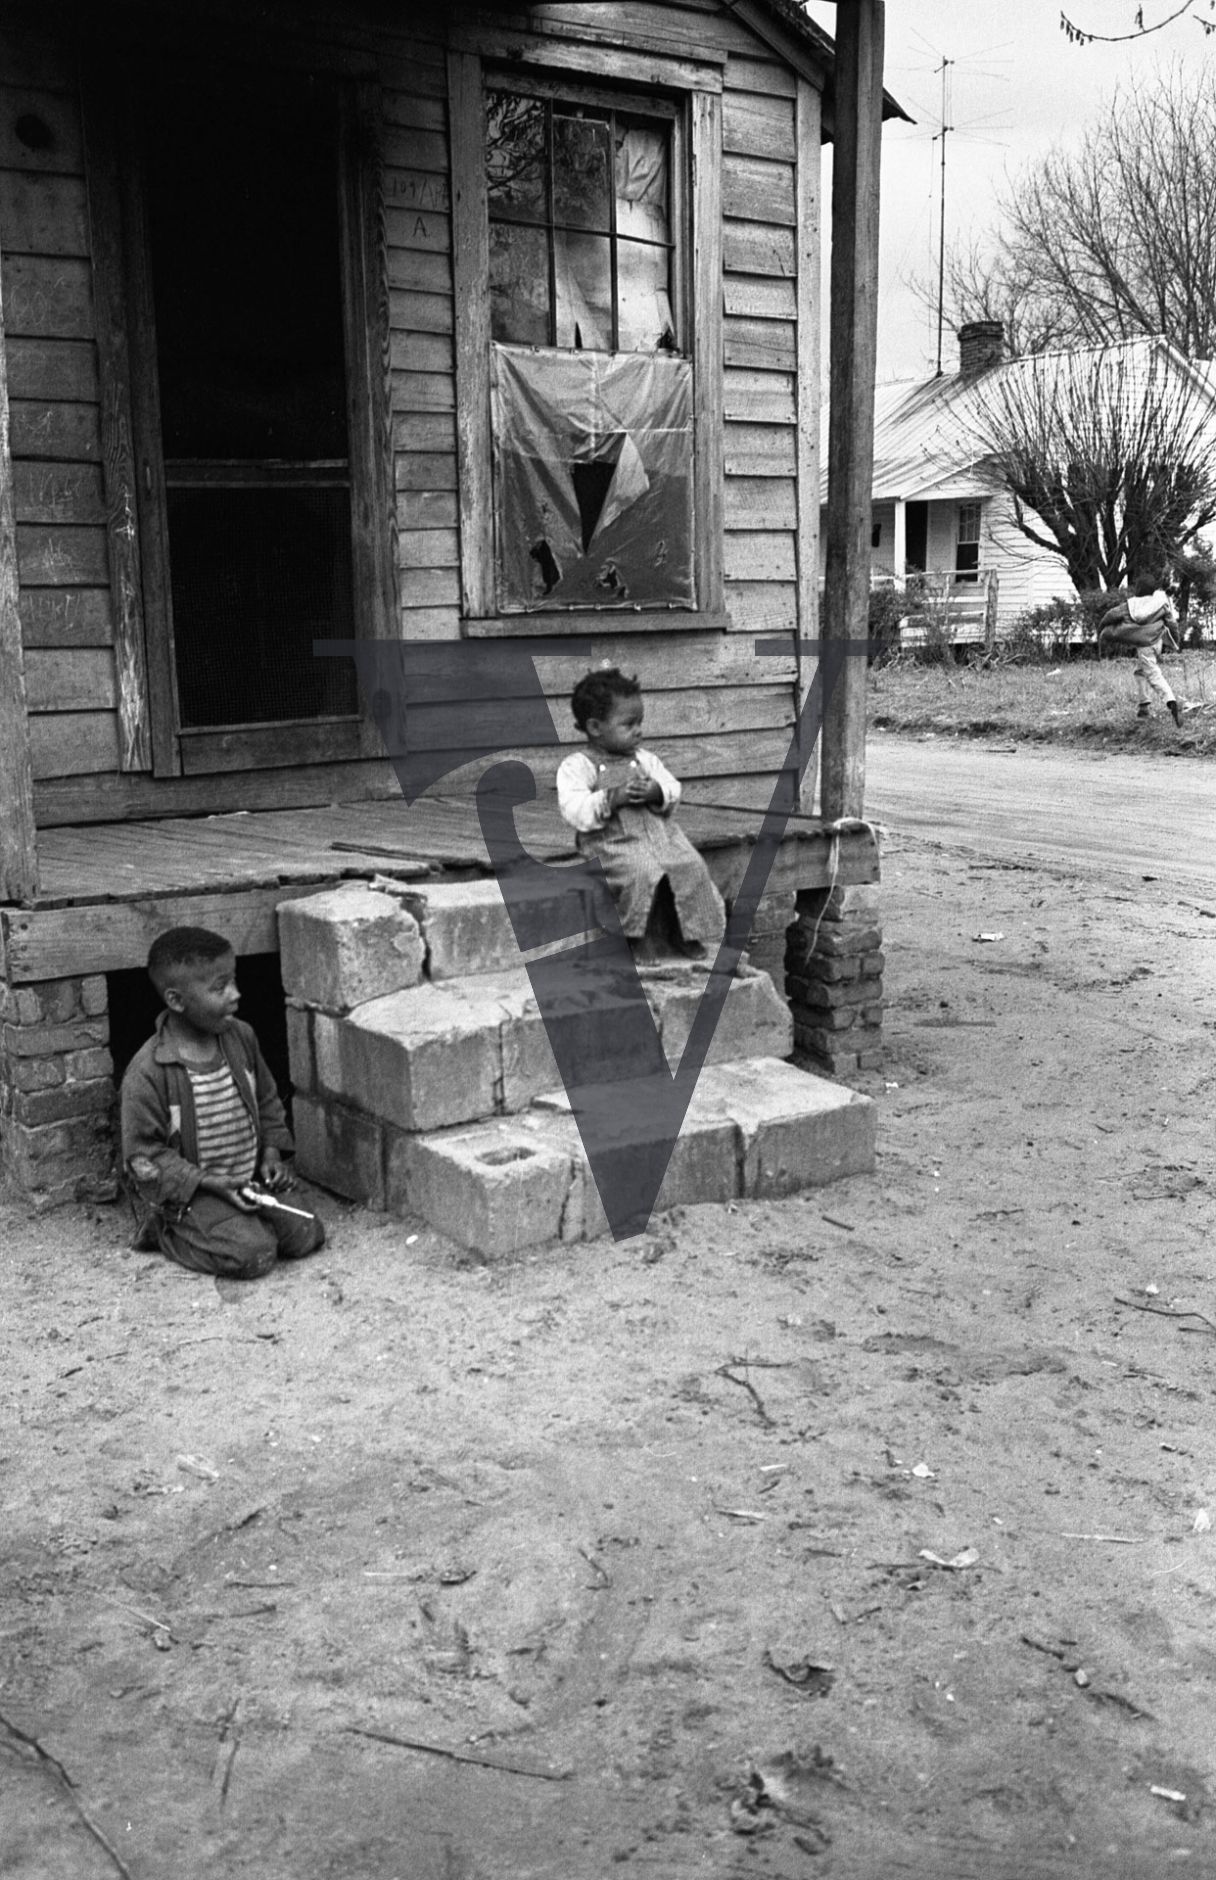 Sumter, South Carolina, rural street scene, winter, housing, children on house front.